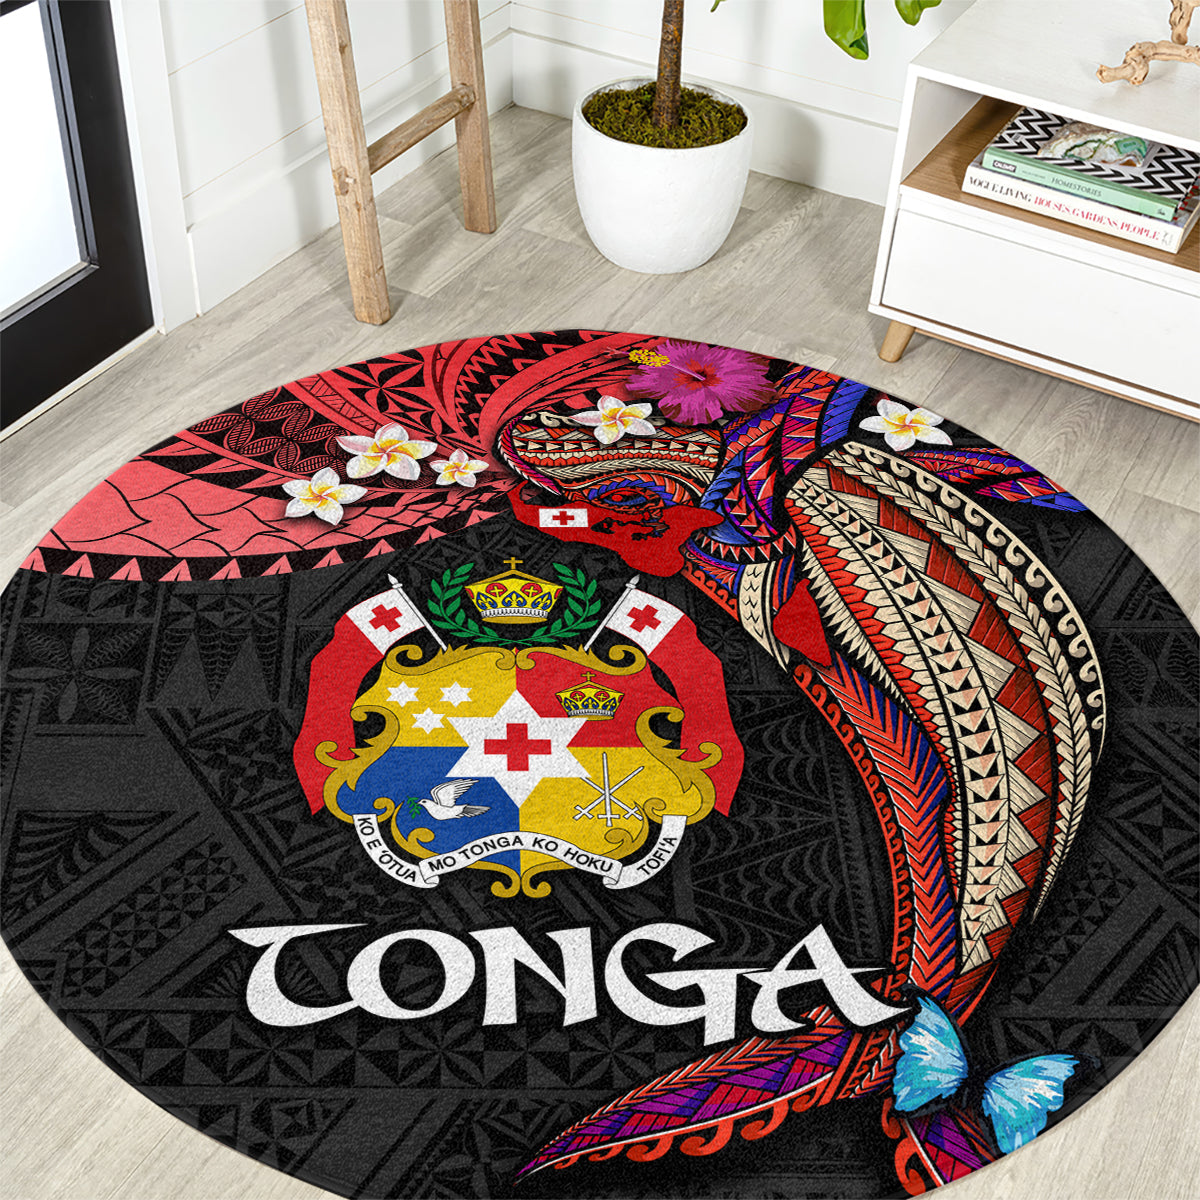 Tonga Emancipation Day Round Carpet Ngatu Humpback Whale Polynesian Flower